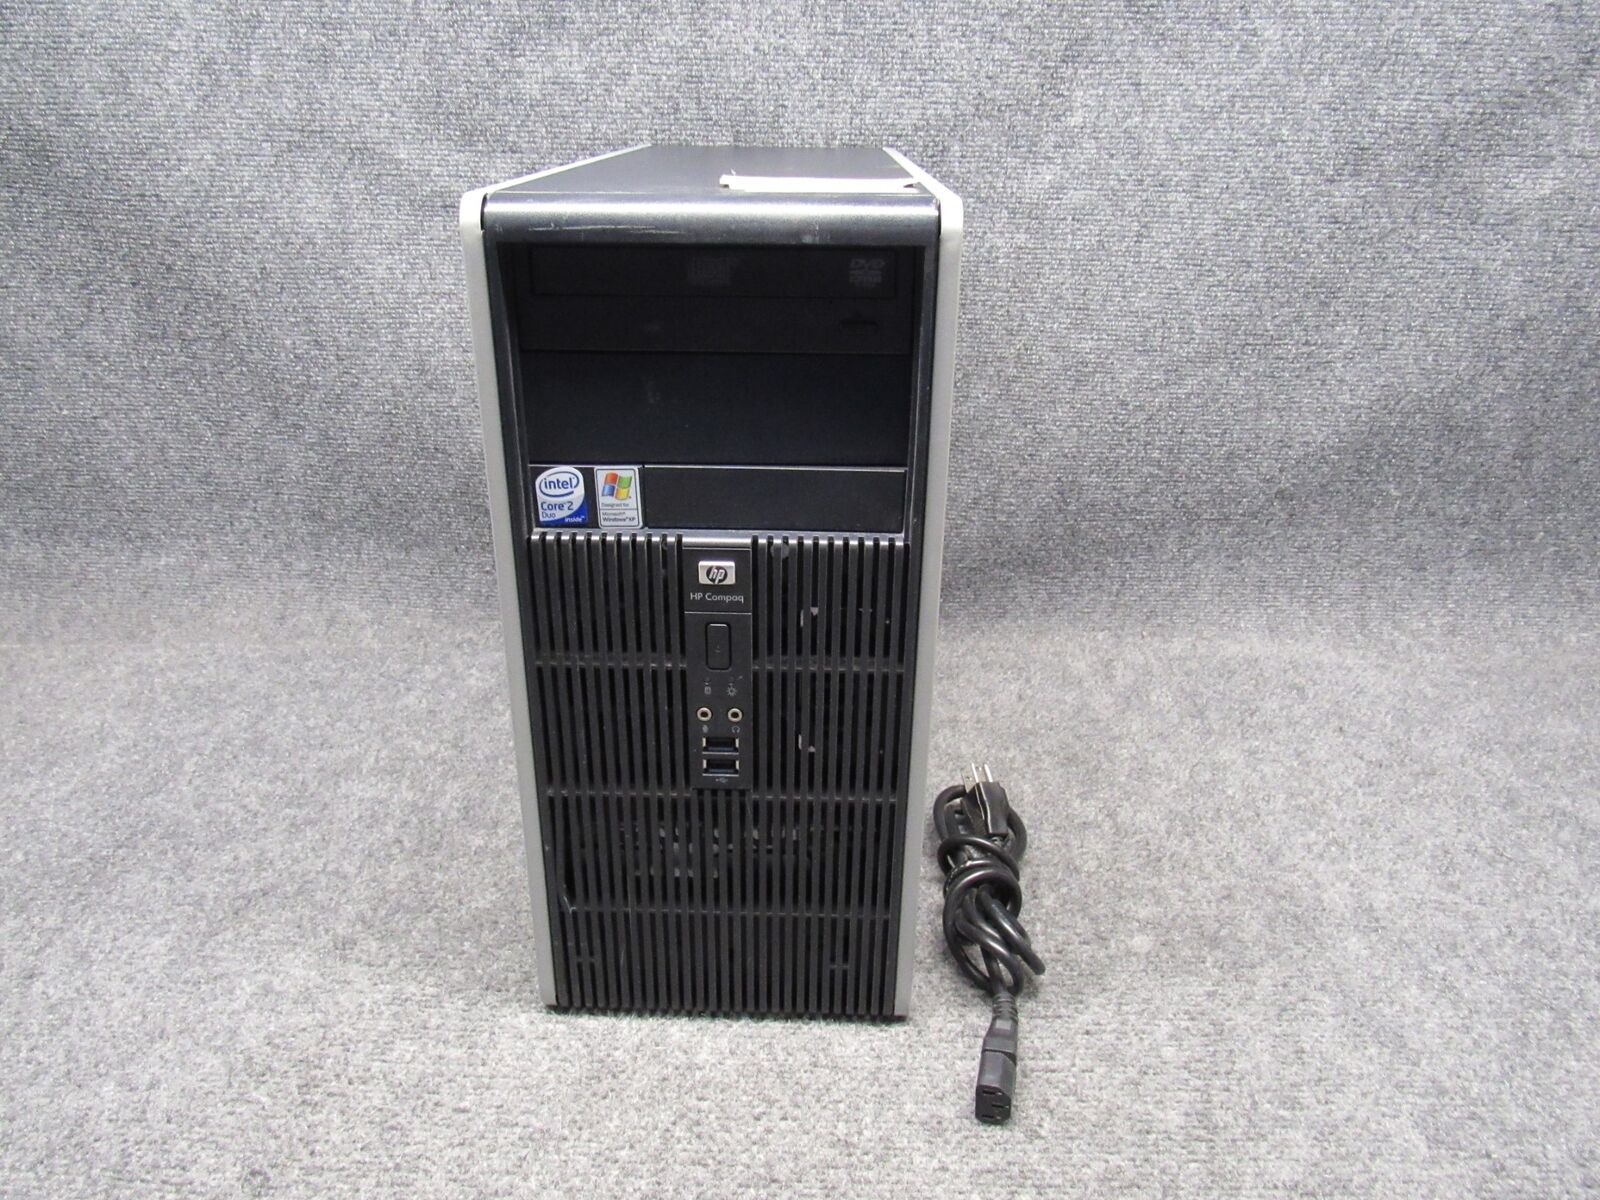 HP Compaq dc5700 Microtower PC with Intel Pentium 4 2.80GHz 1GB RAM 250GB HDD